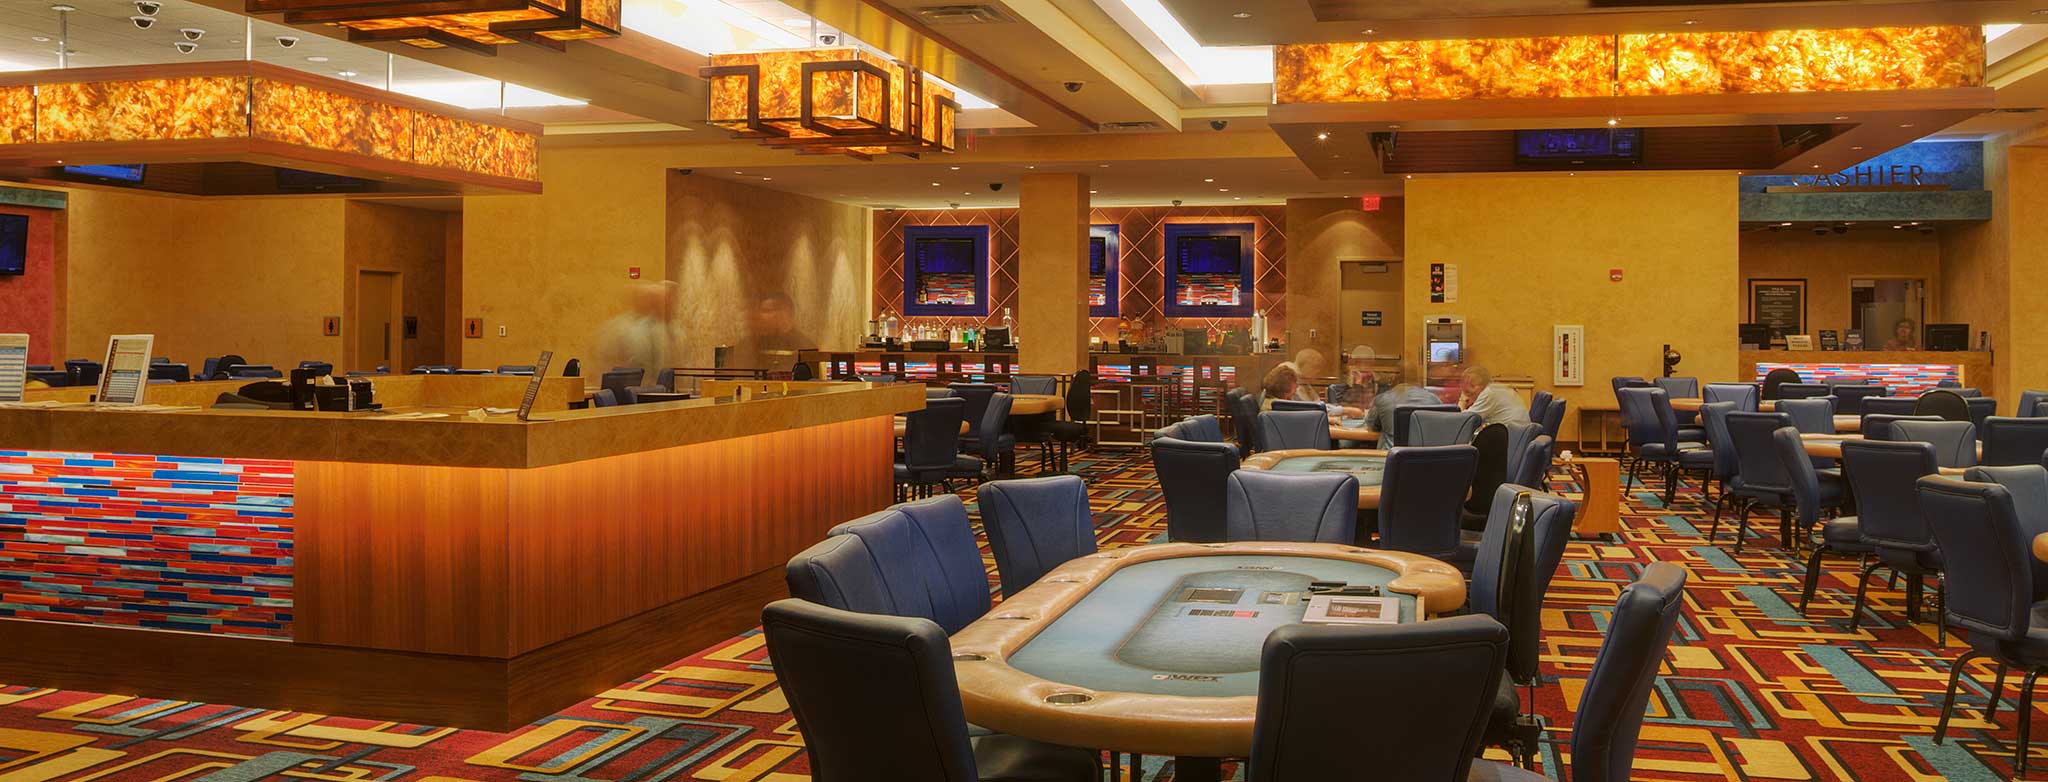 Poker is Thriving in Seminole Coconut Creek’s New Room